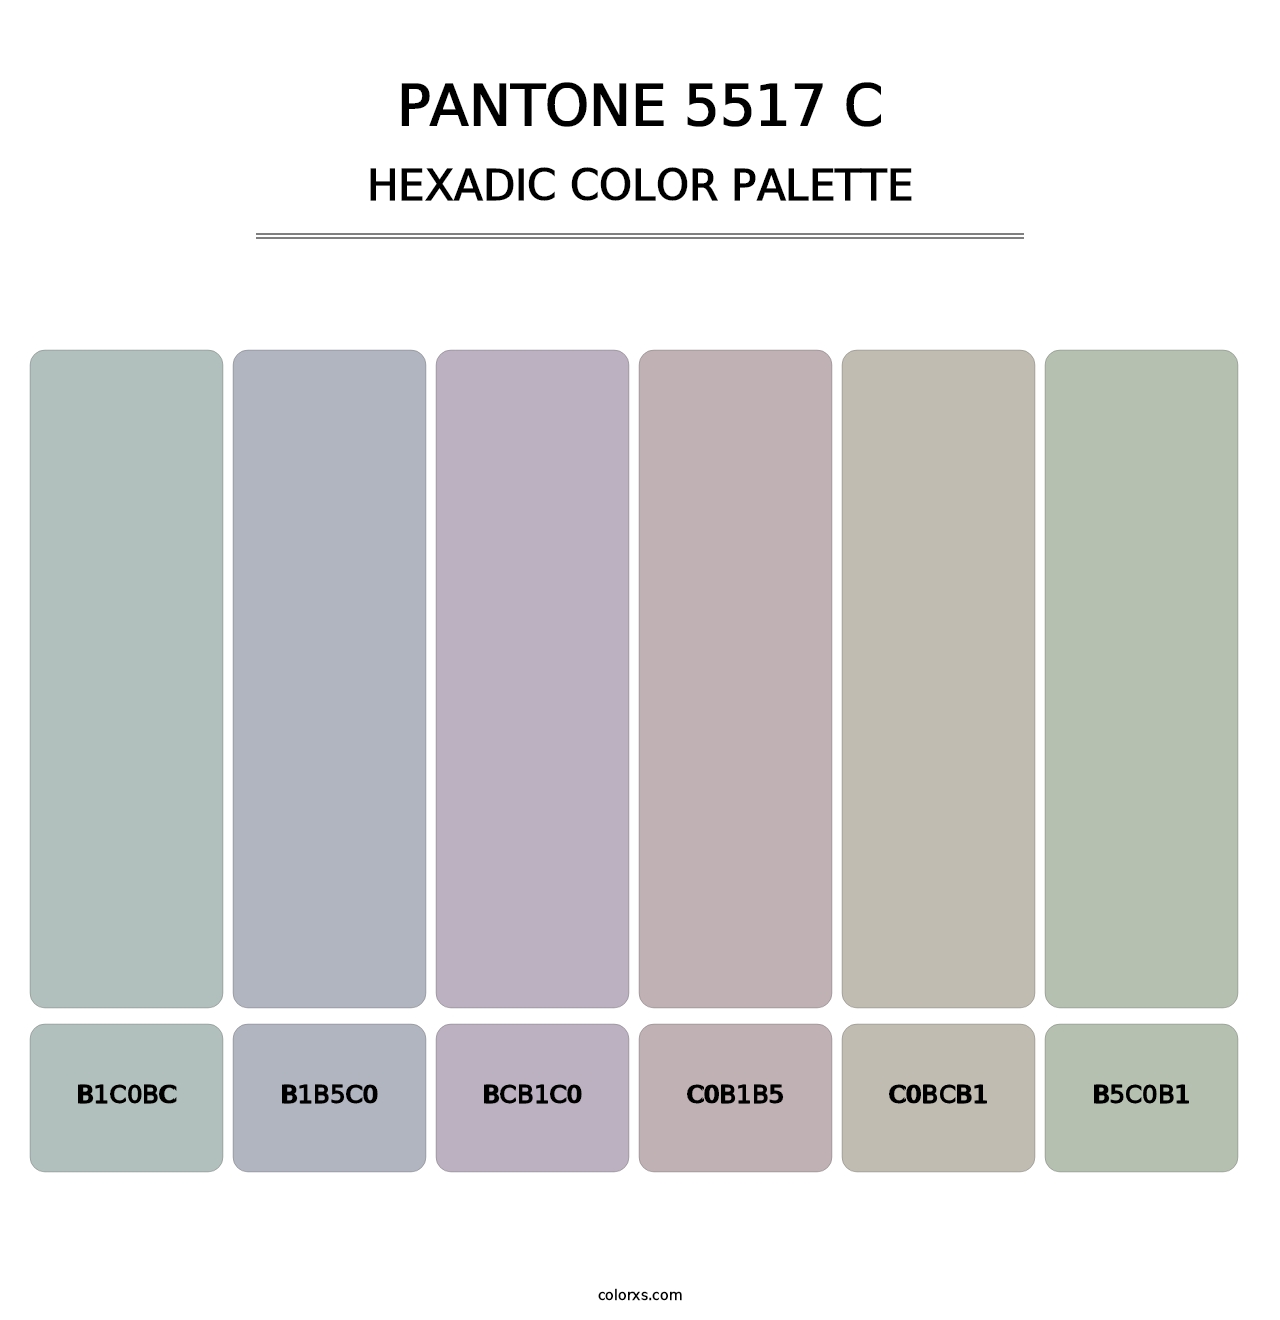 PANTONE 5517 C - Hexadic Color Palette